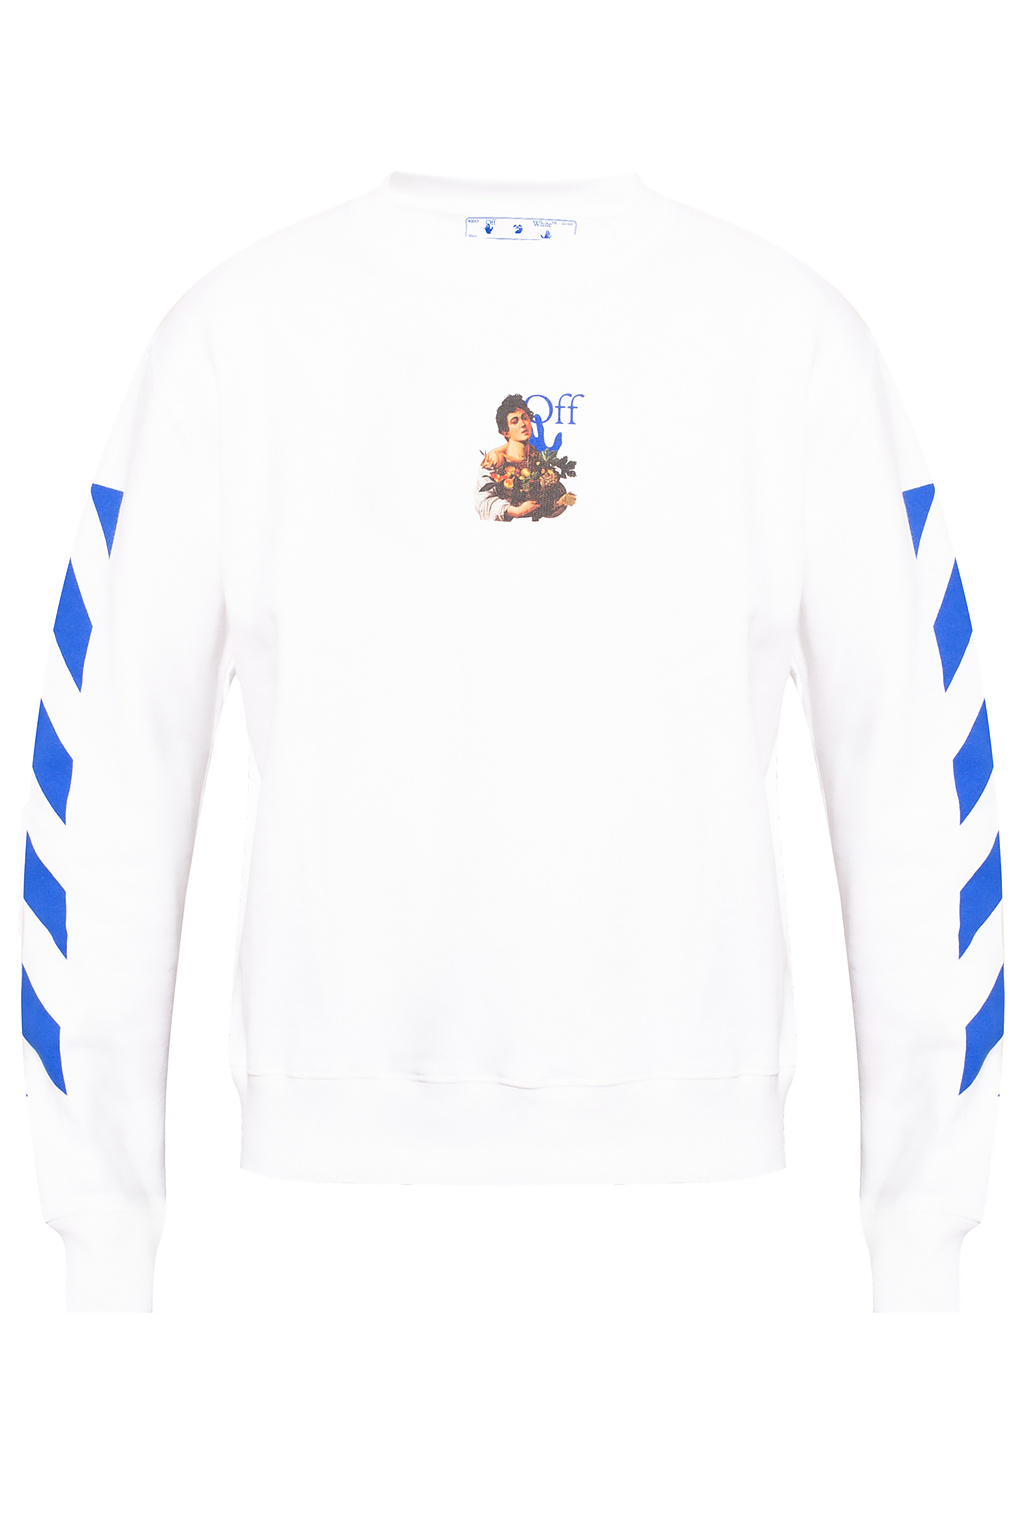 White - ROTATE Sunday embroidered Off hoodie - sweatshirt GB - Printed organic-cotton Schwarz chiffon CamaragrancanariaShops